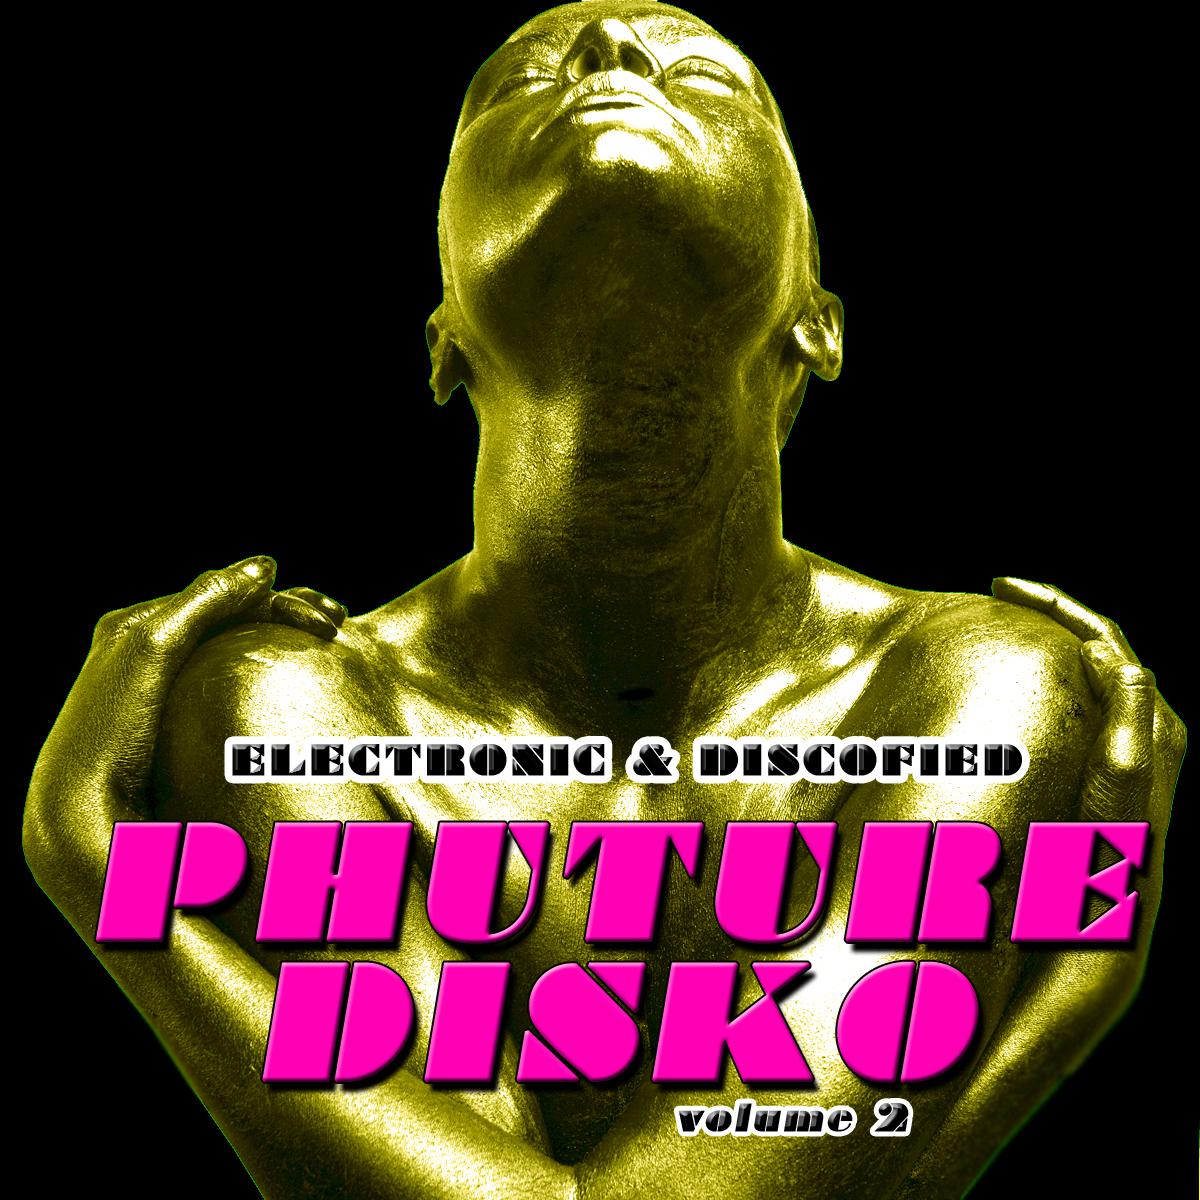 Phuture Disko Vol. 2 - Electronic & Discofied